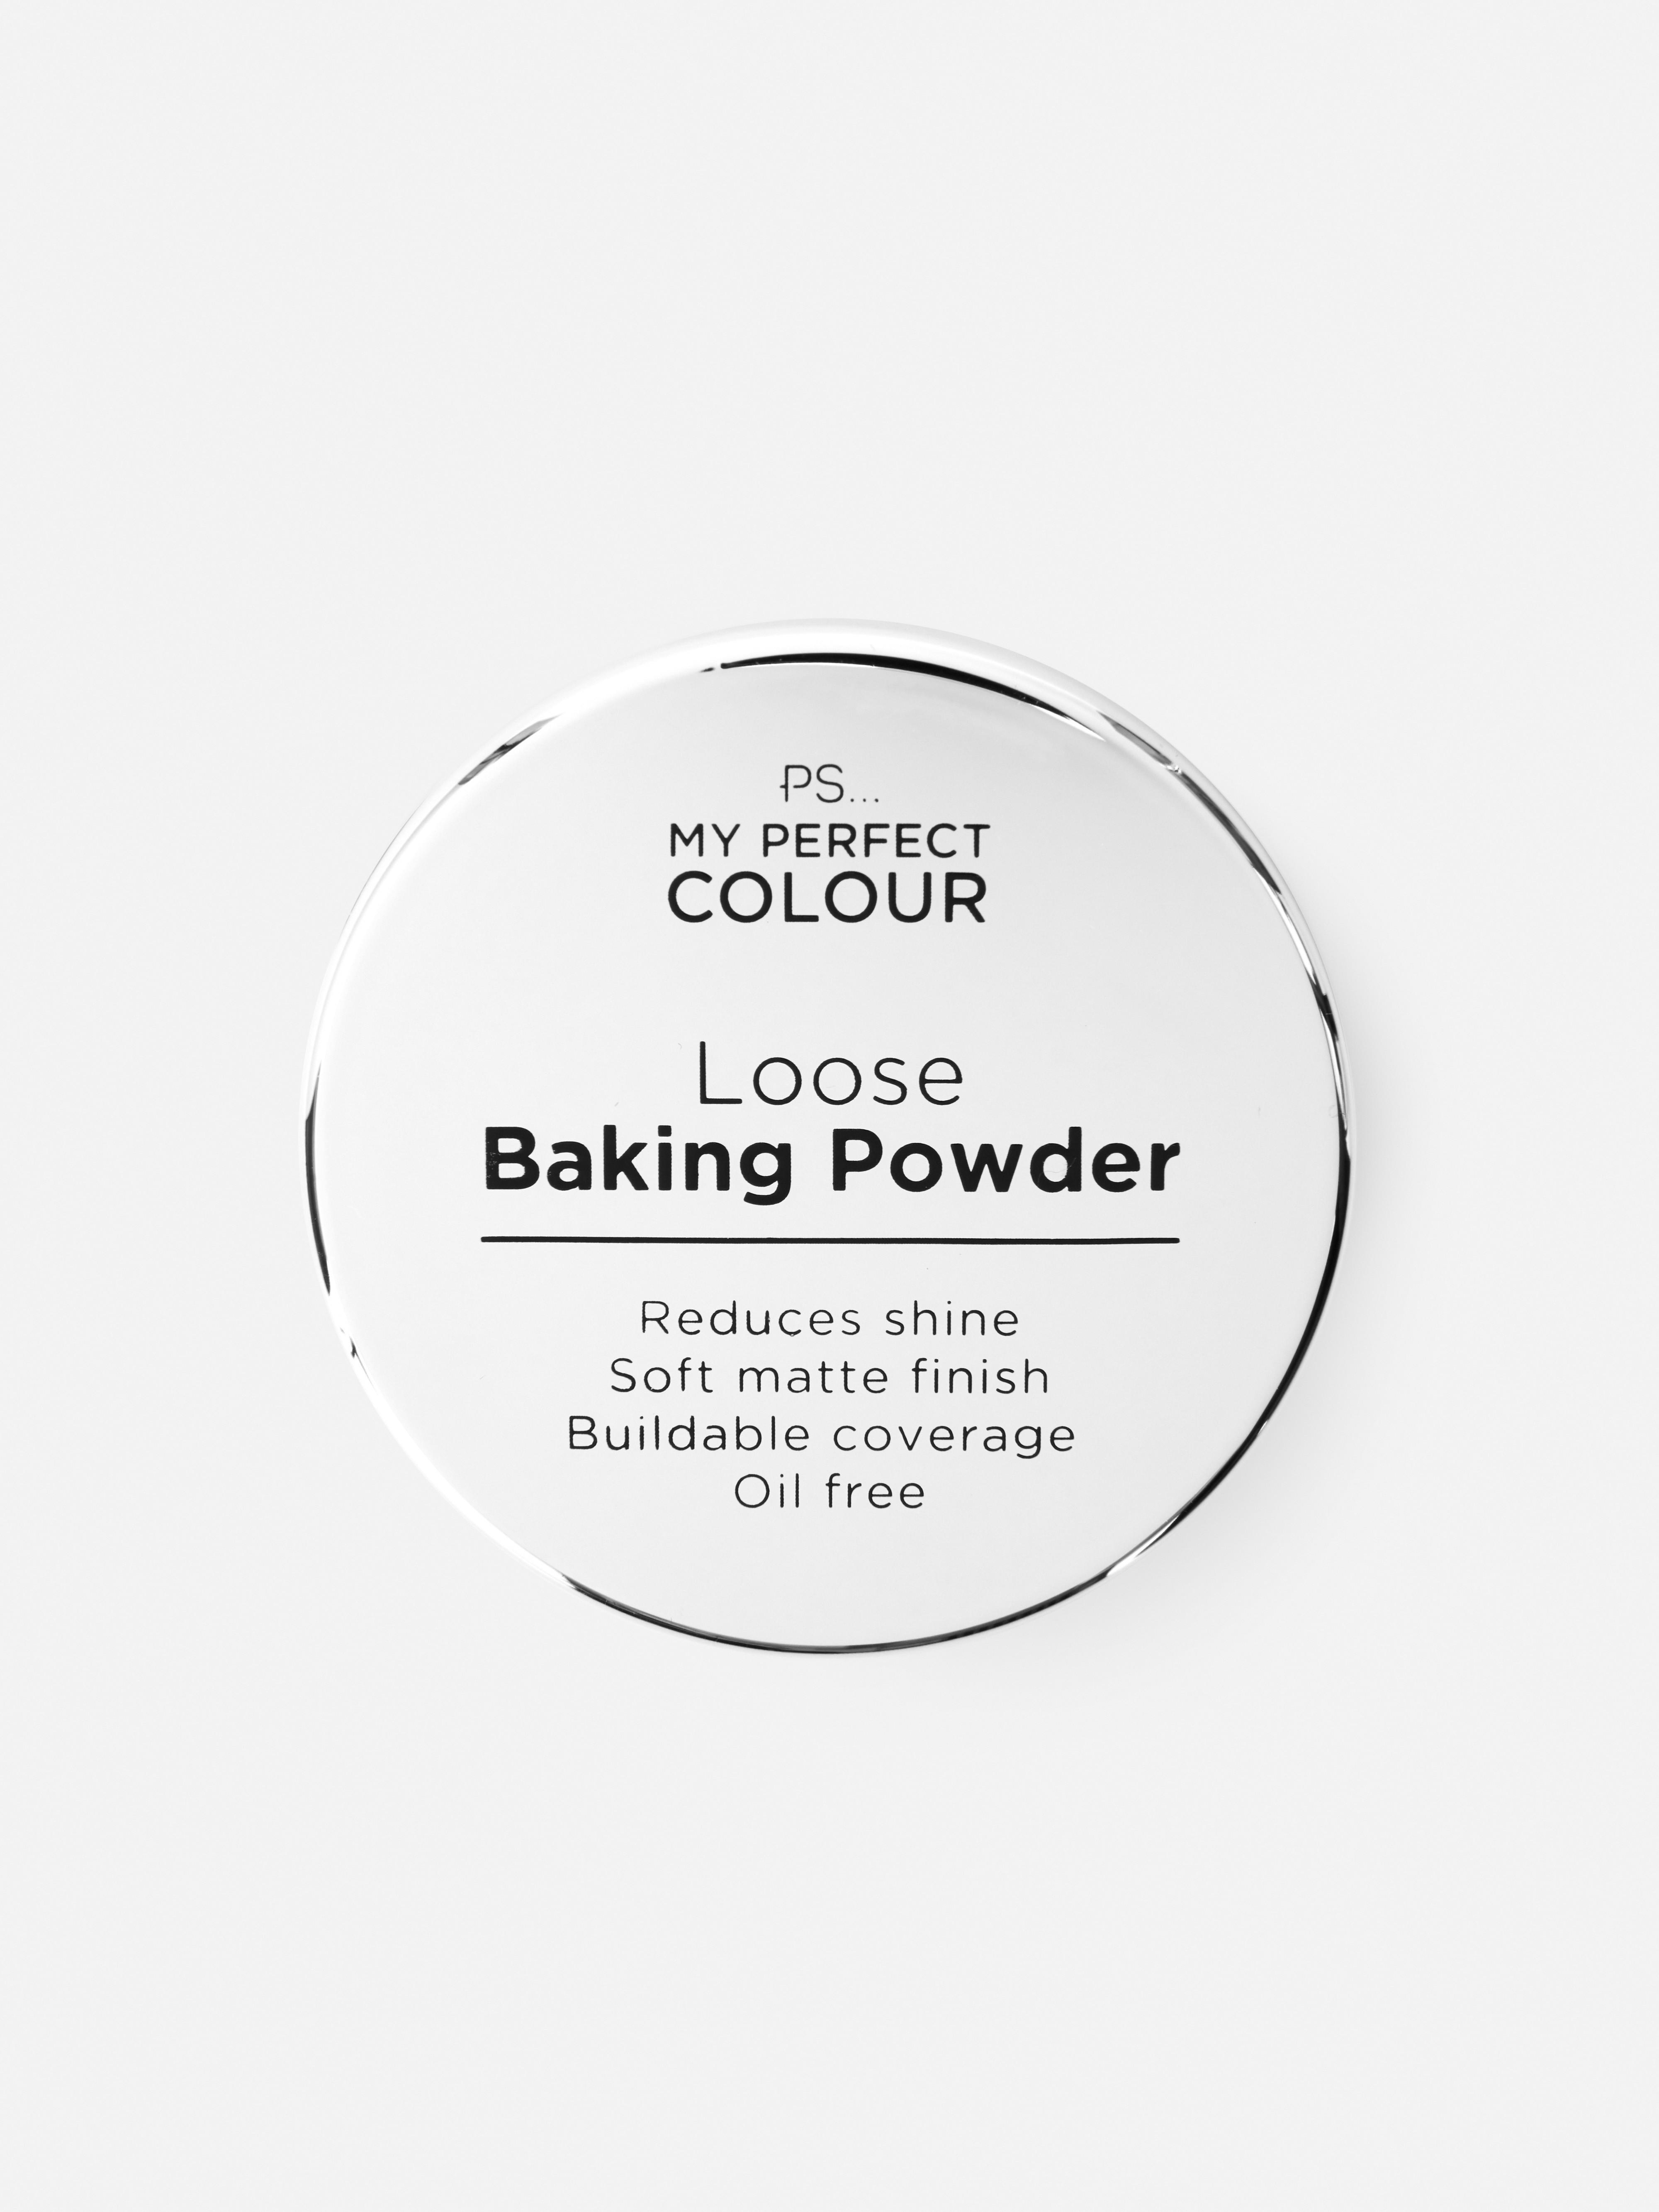 Los Baking Powder PS My Perfect Colour